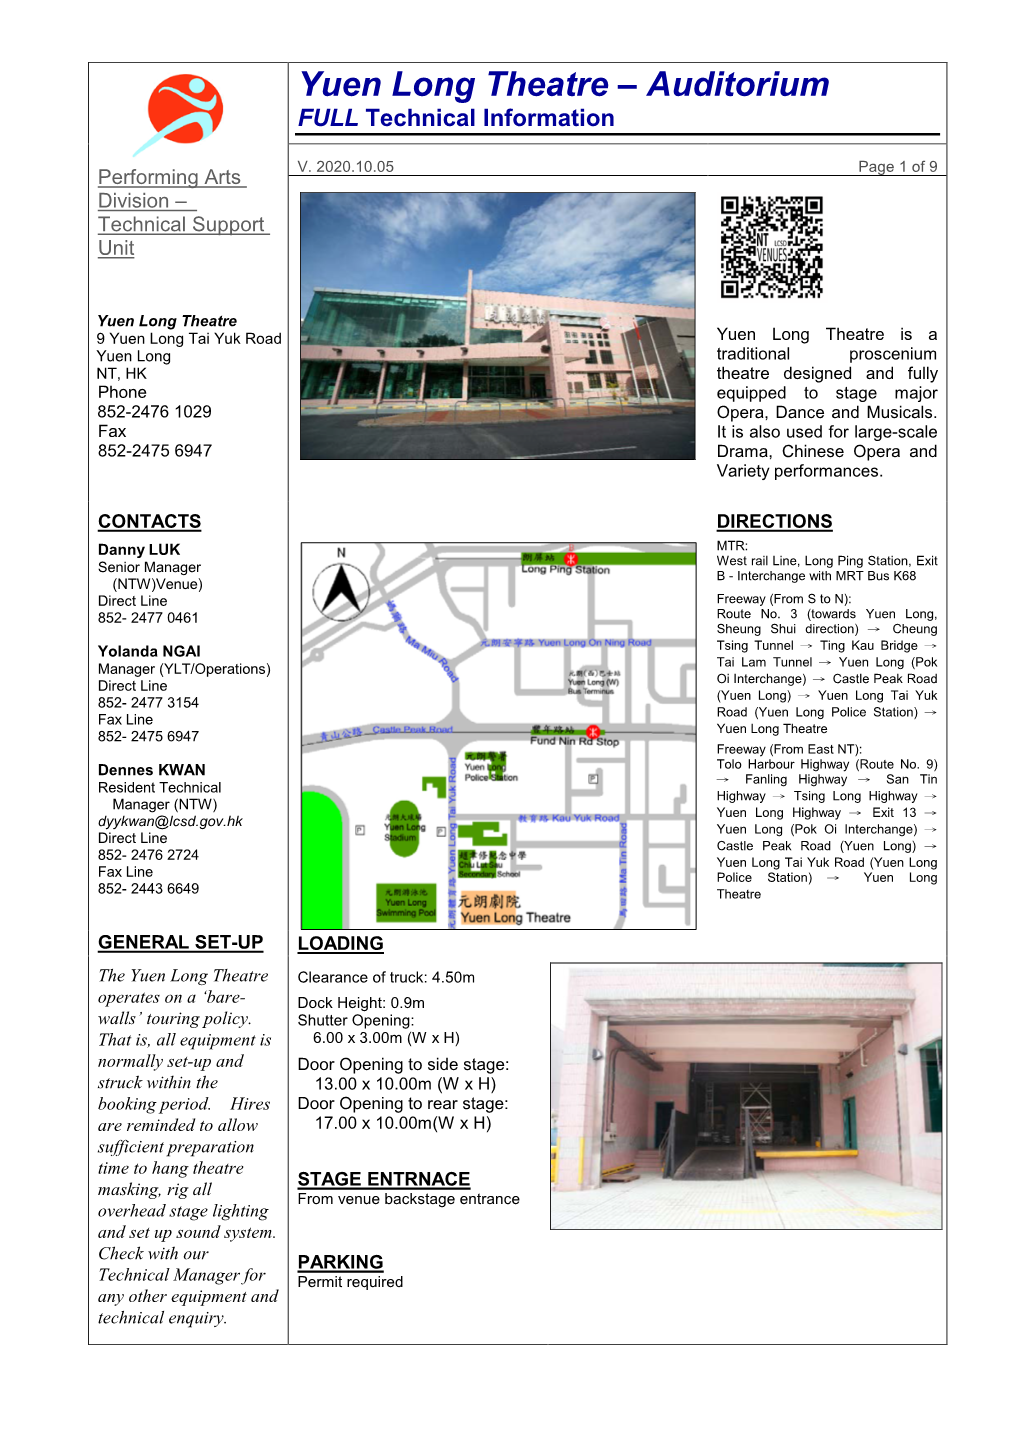 Yuen Long Theatre – Auditorium FULL Technical Information